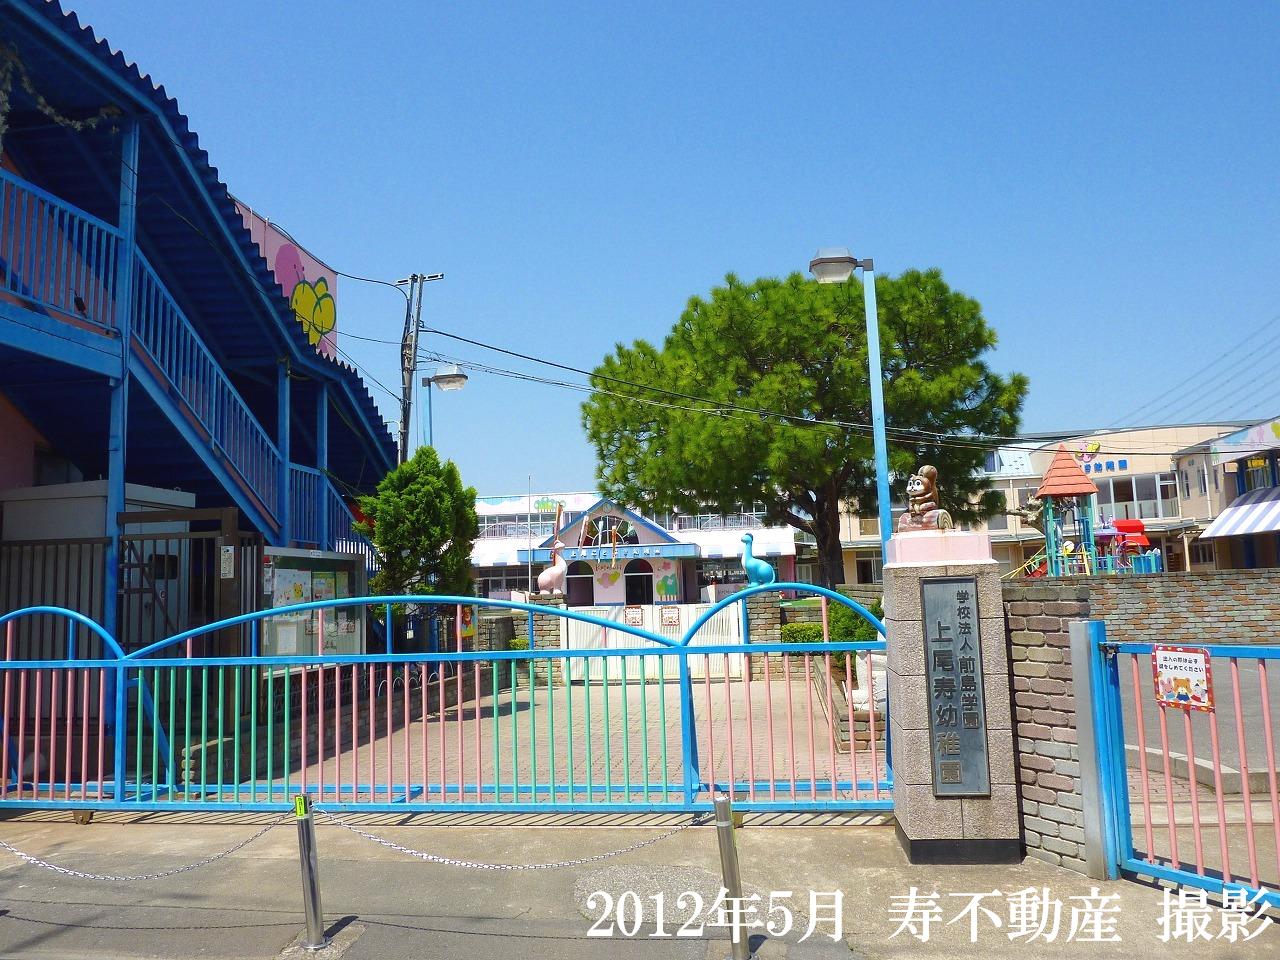 kindergarten ・ Nursery. Ageo Kotobuki kindergarten (kindergarten ・ 106m to the nursery)